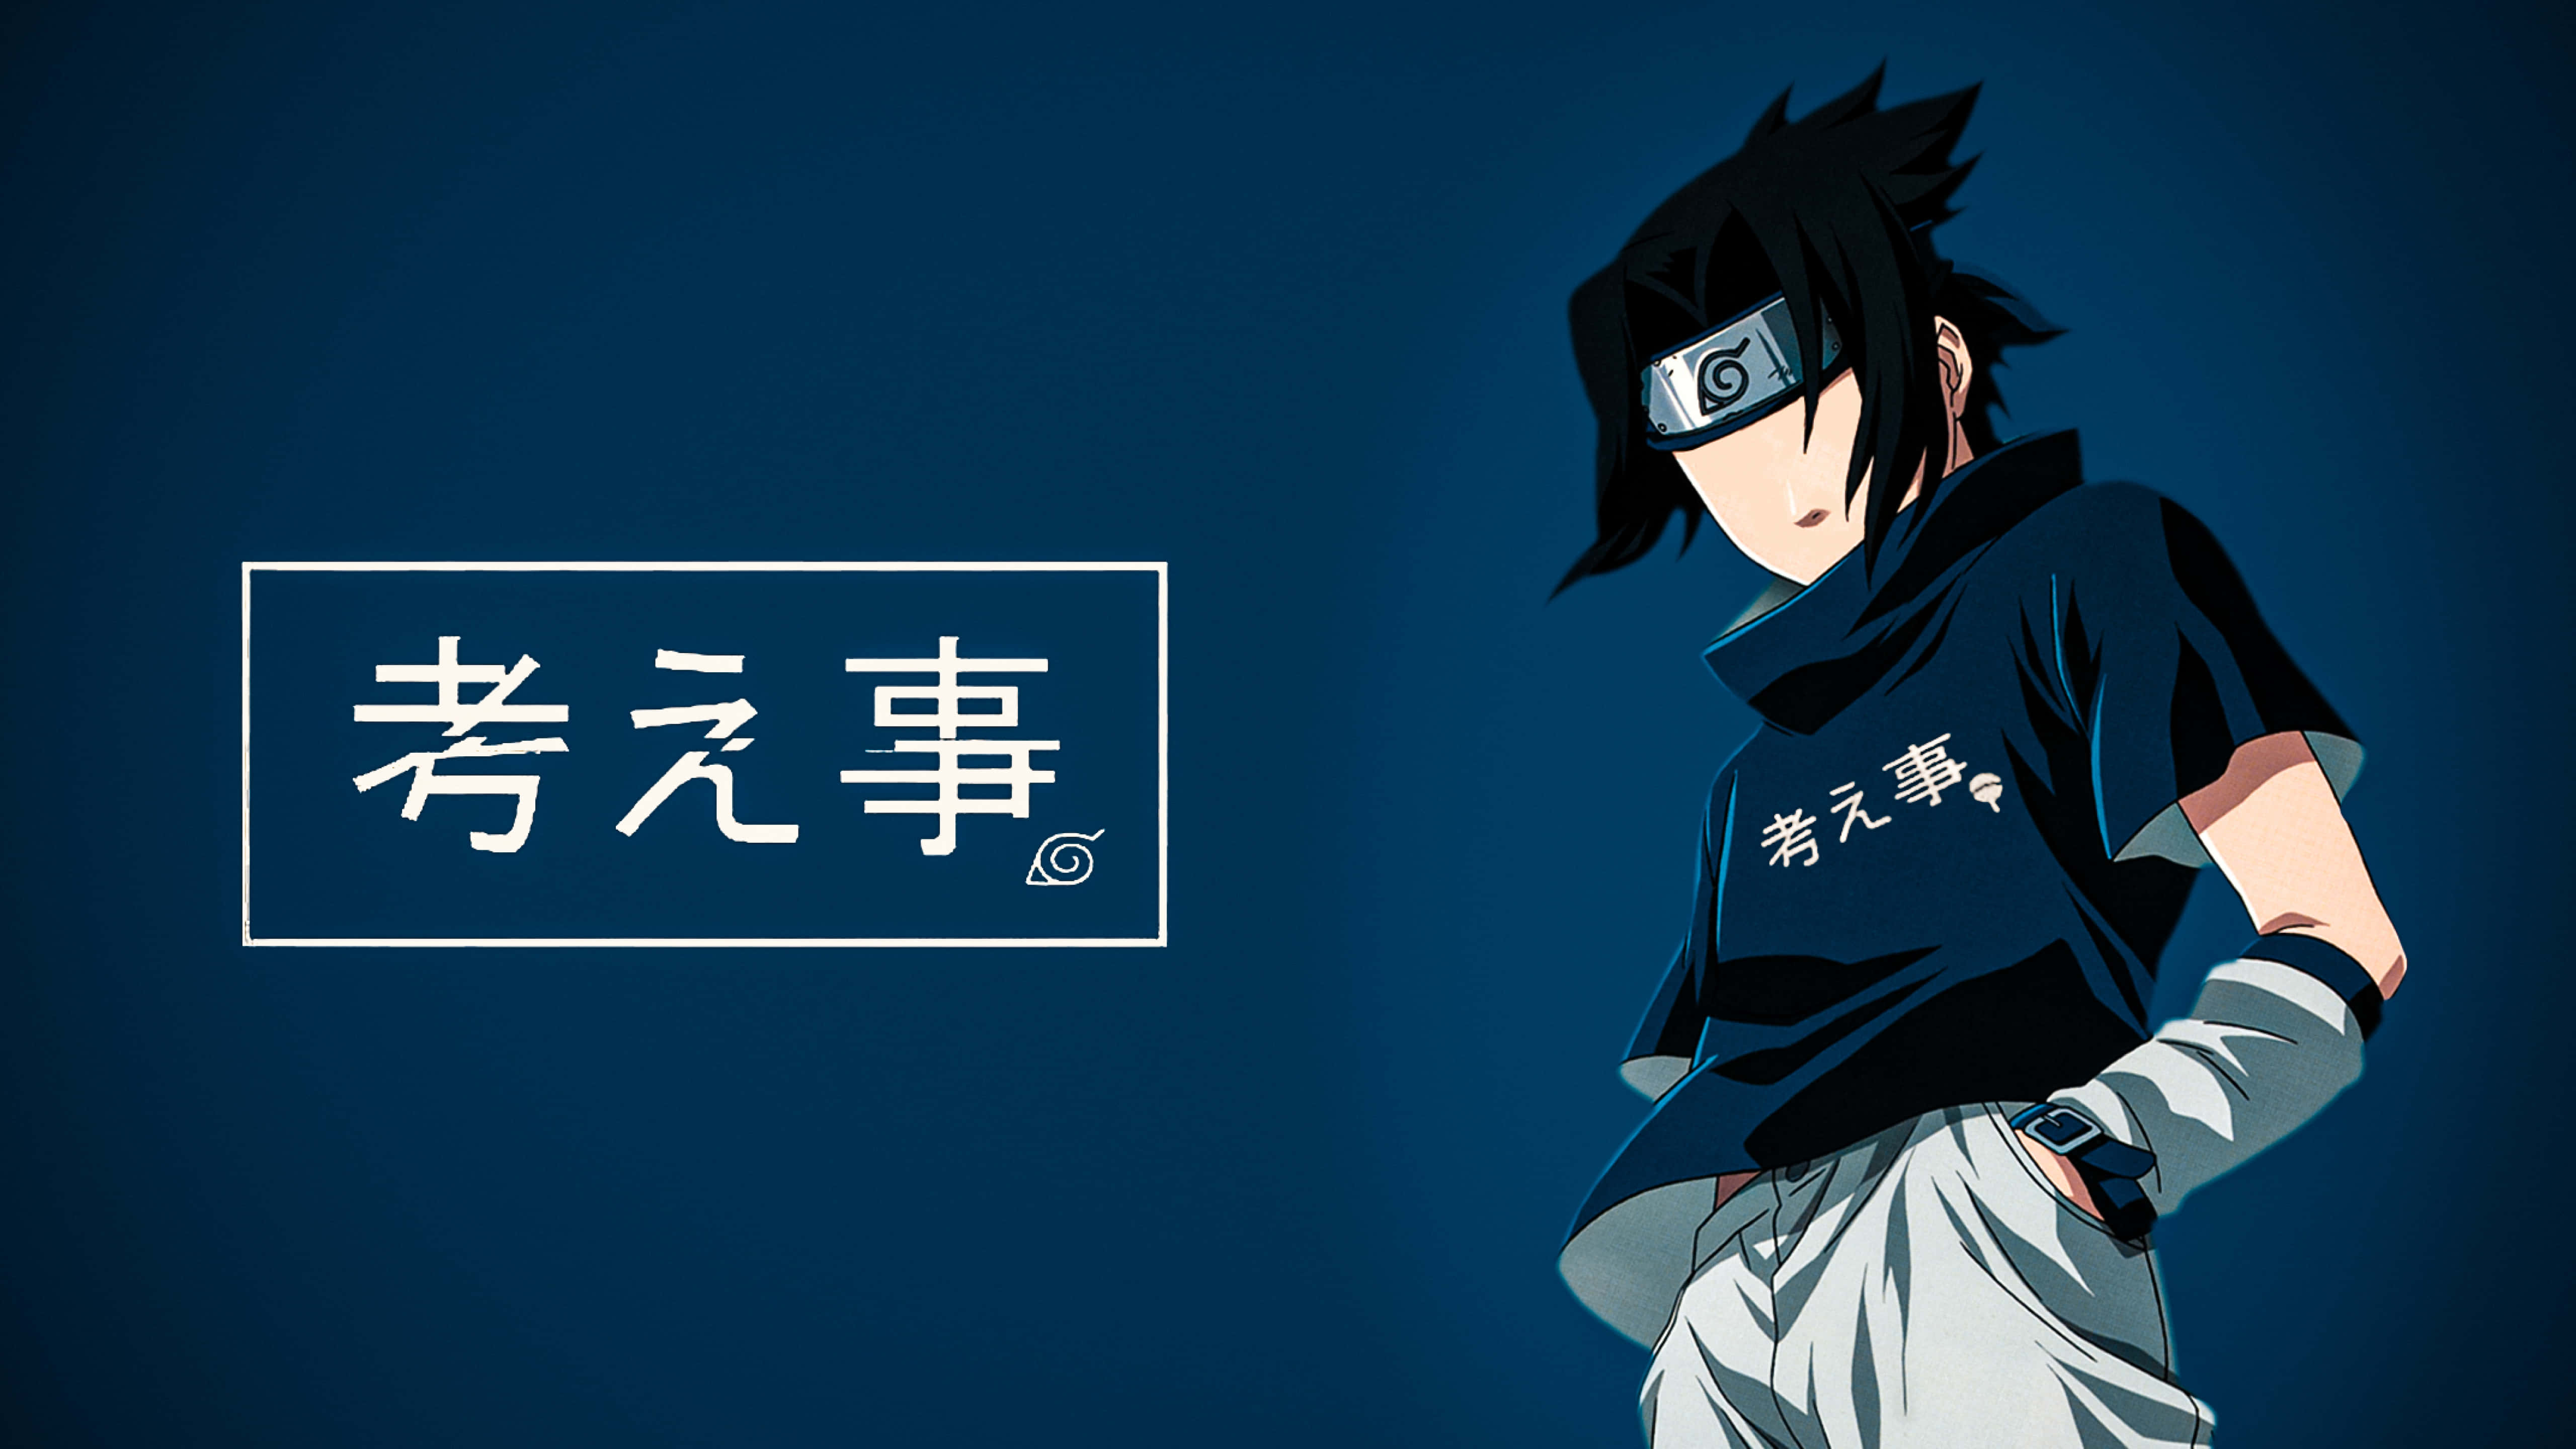 Sasukeblu Sputa Fuoco - Un Personaggio Anime Dinamico. Sfondo